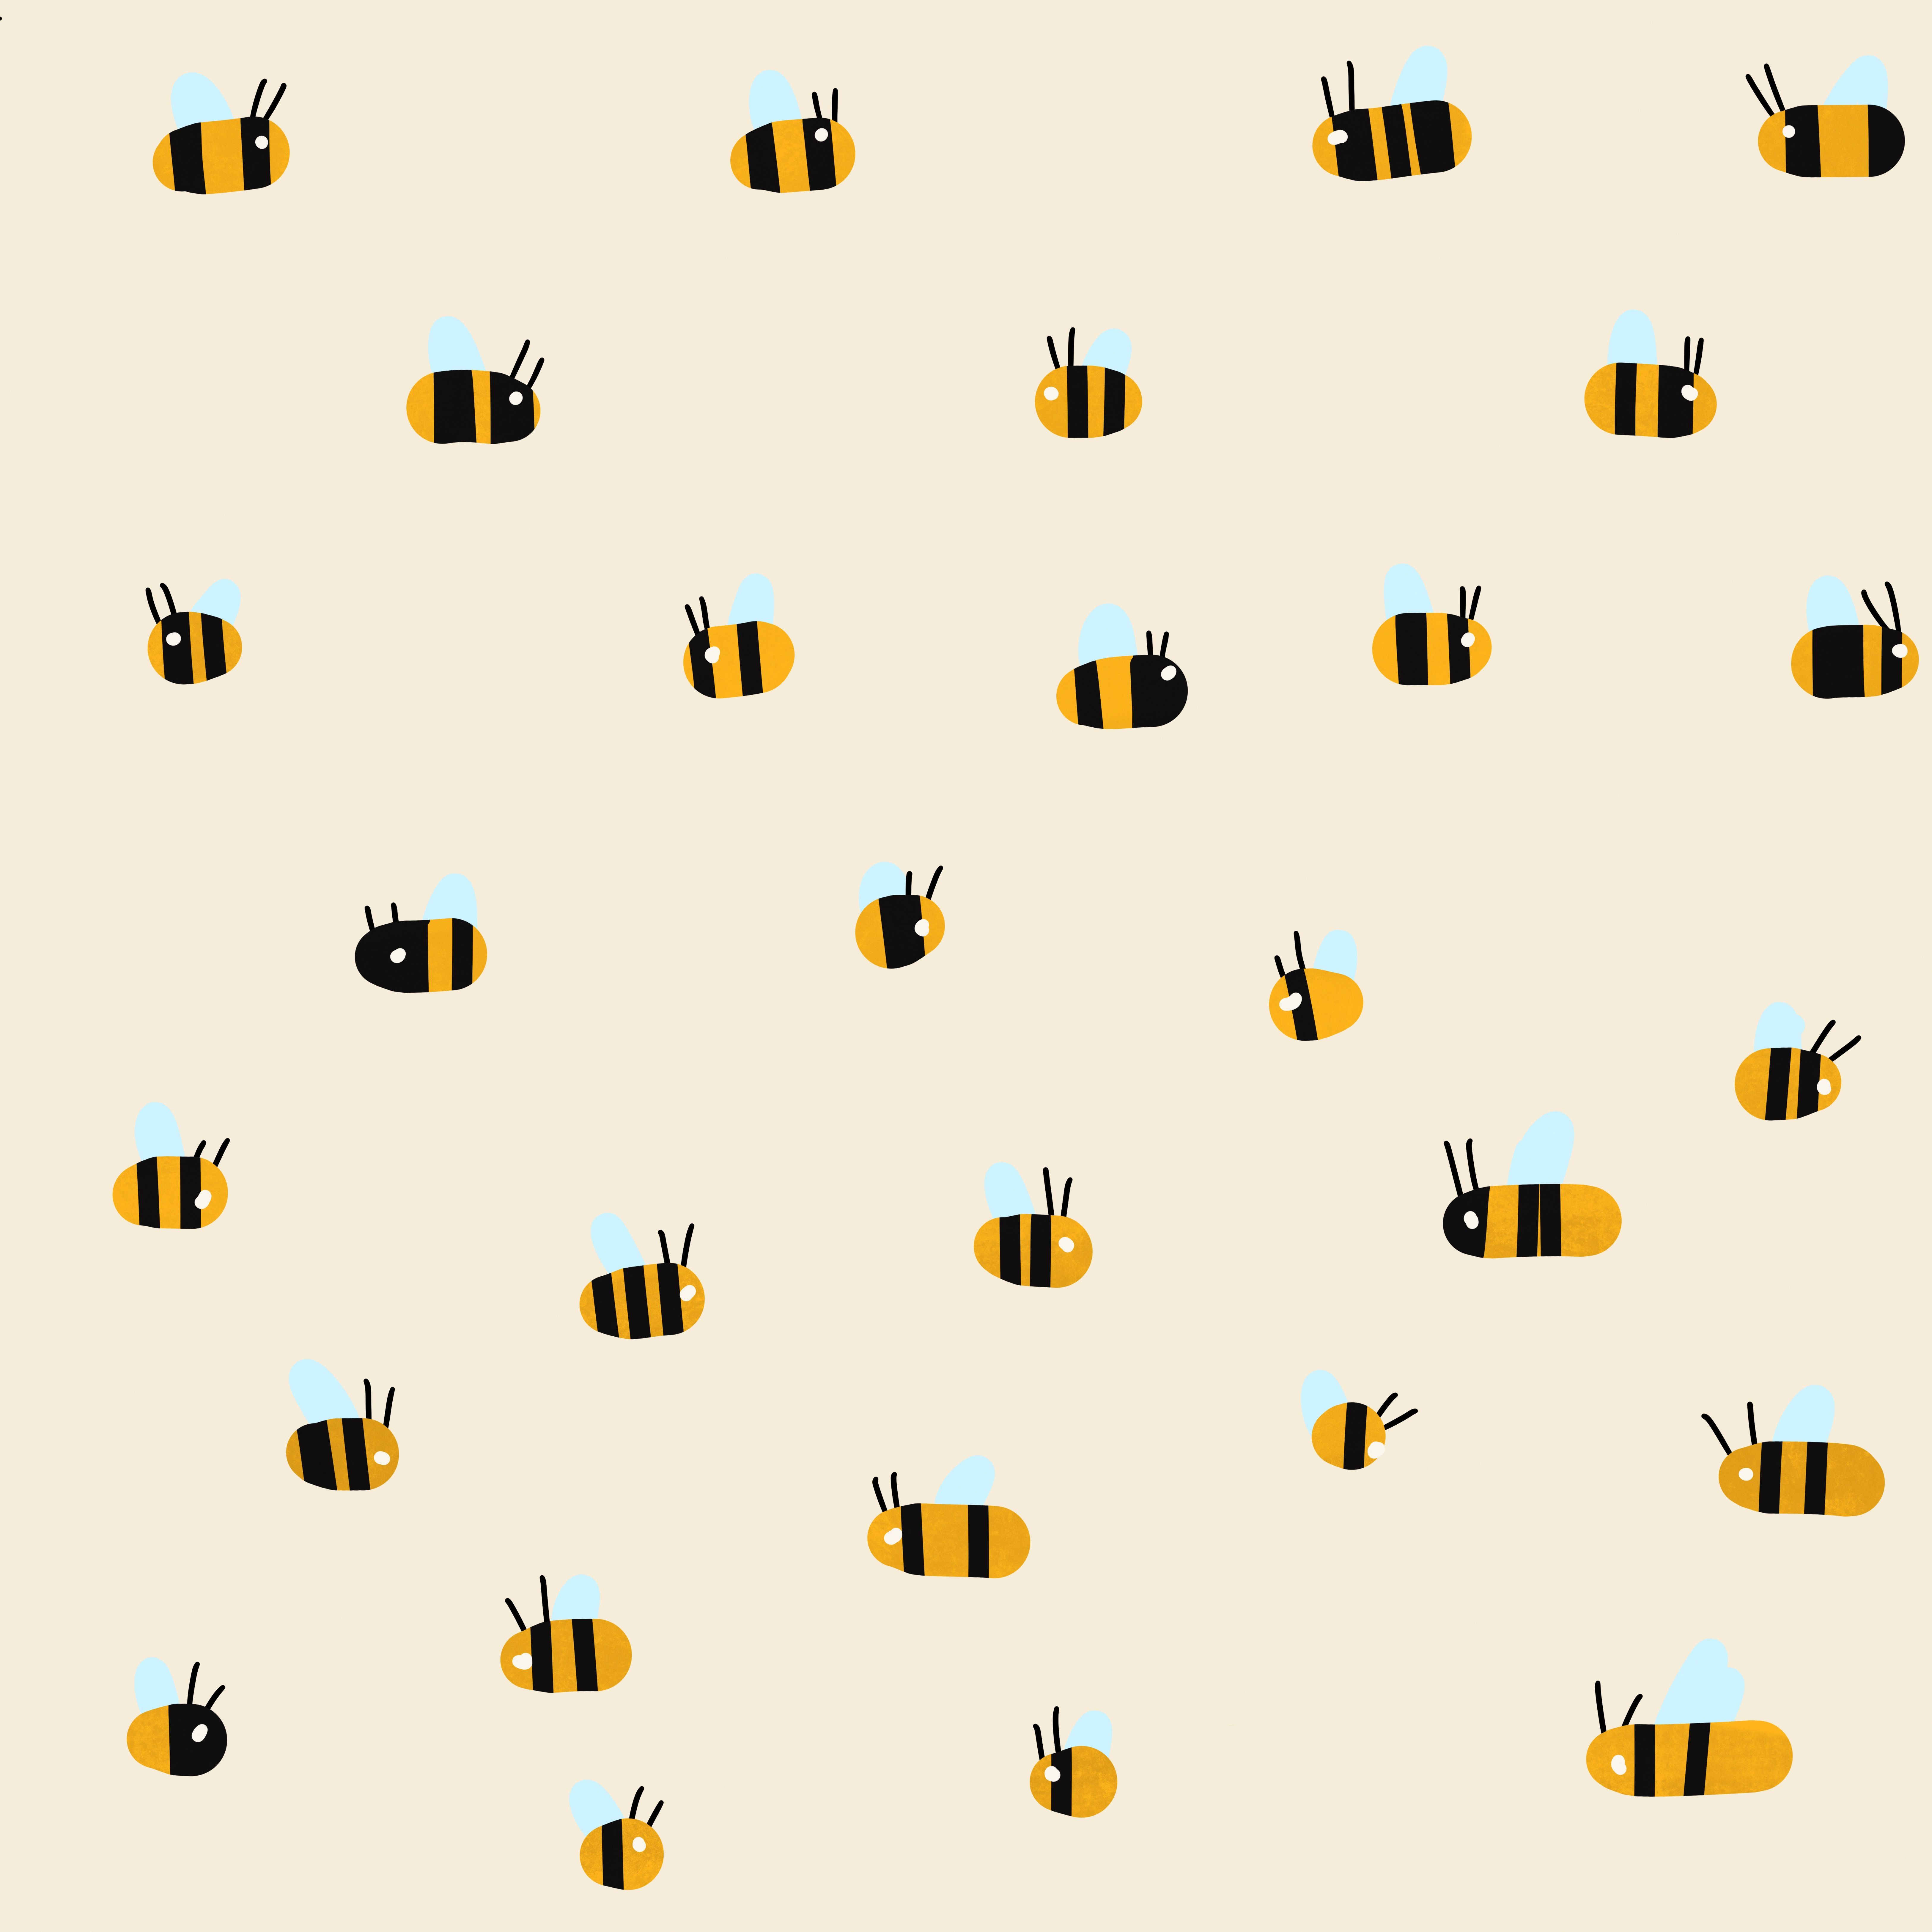 Bees flying around. Cute desktop wallpaper, Phone wallpaper patterns, iPhone background wallpaper